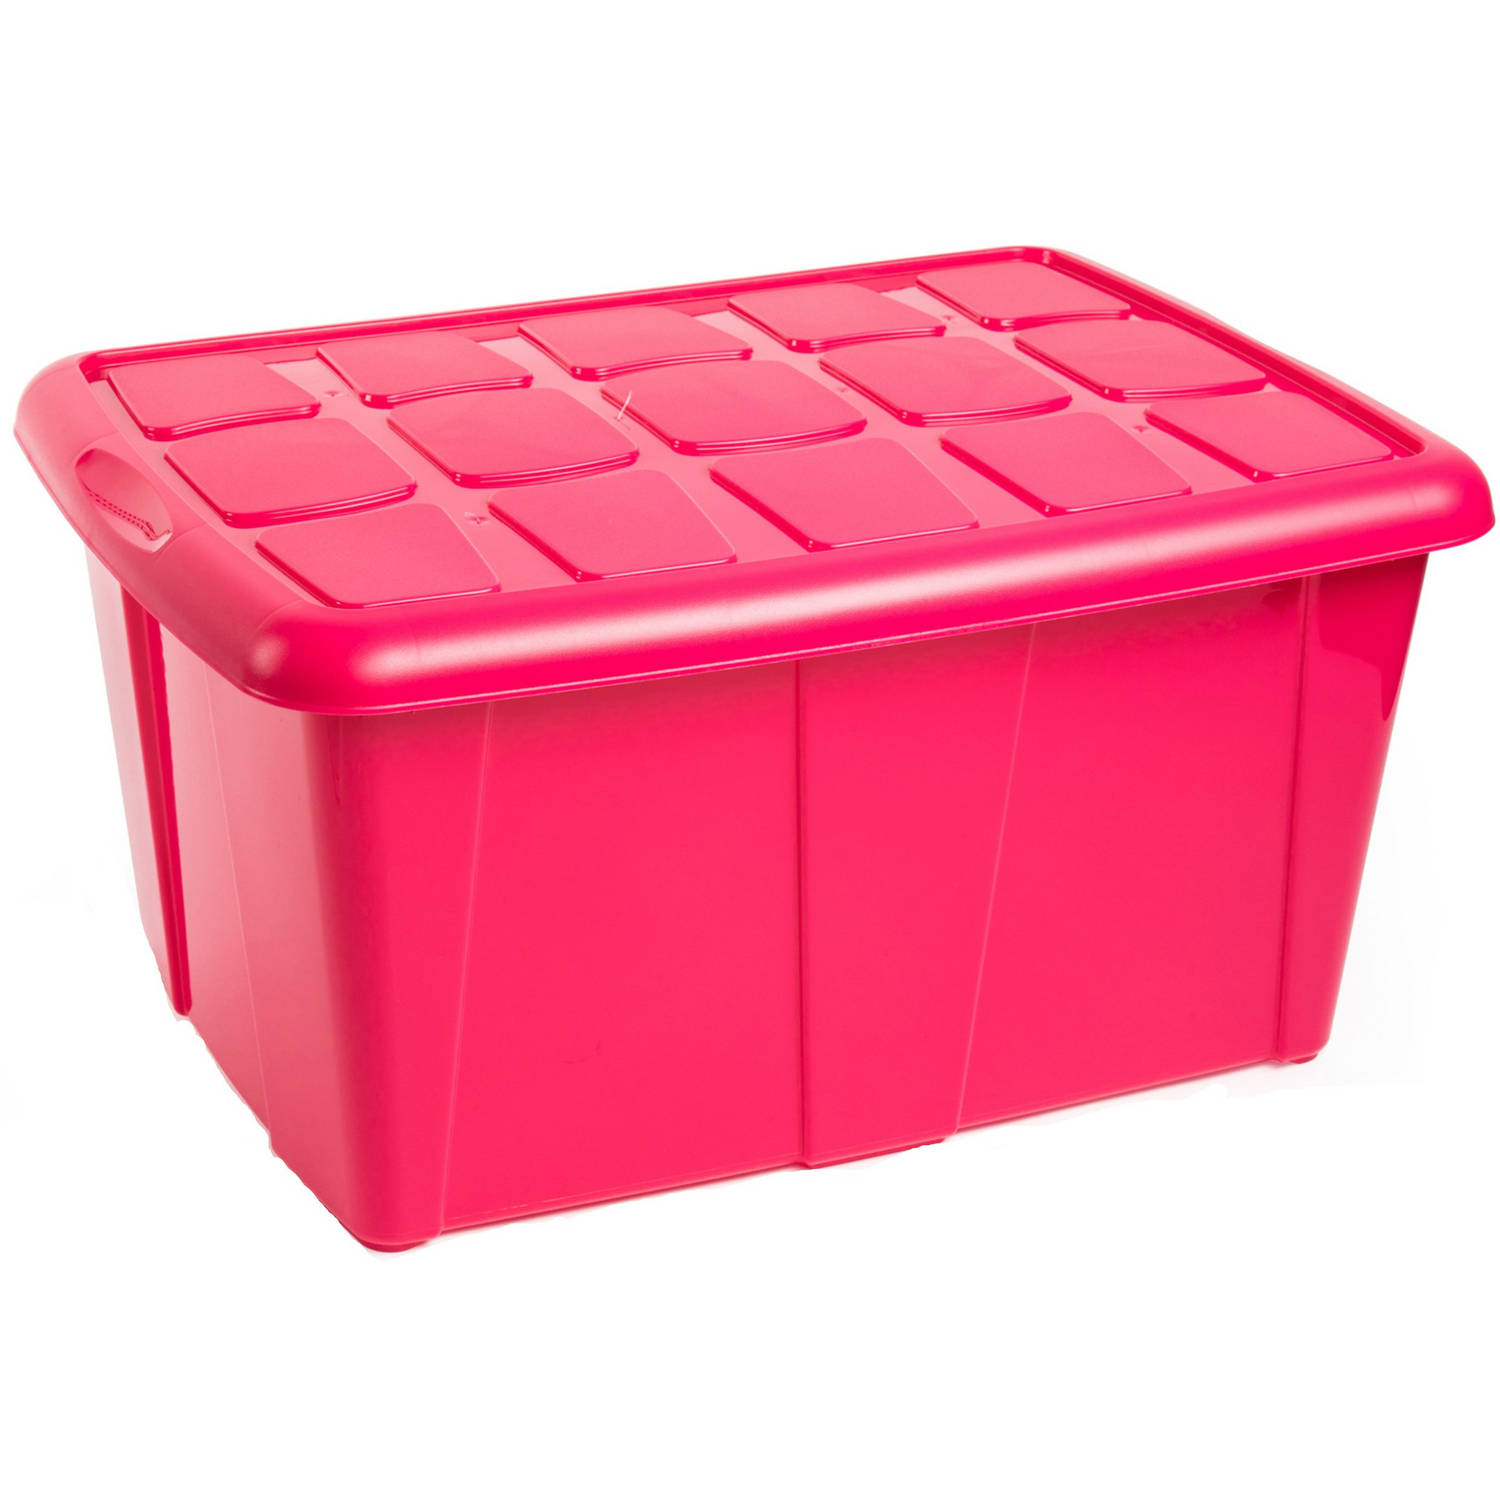 Opslagbox kist van 60 liter met deksel Fuchsia roze kunststof 63 x 46 x 32 cm Opbergbox